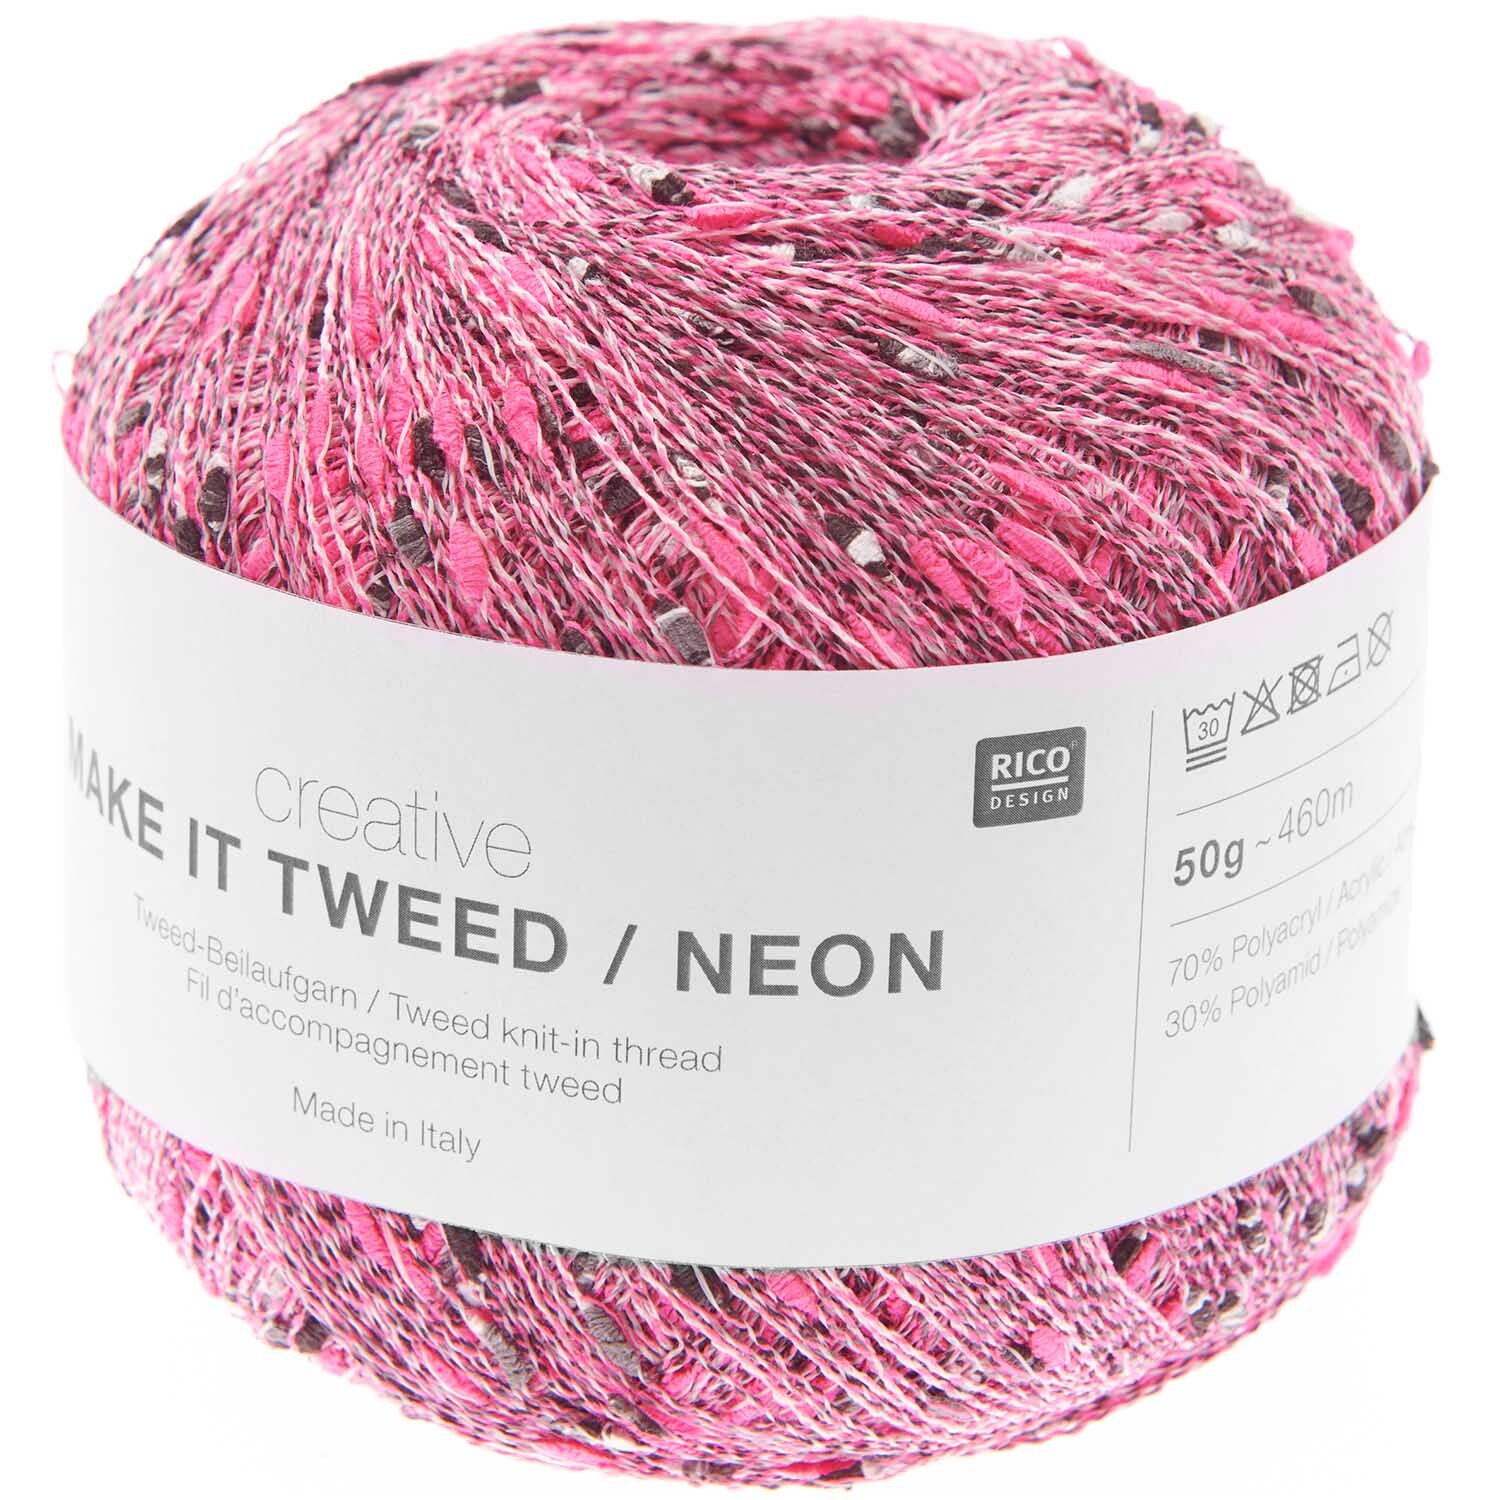 Creative Make It Tweed Neon